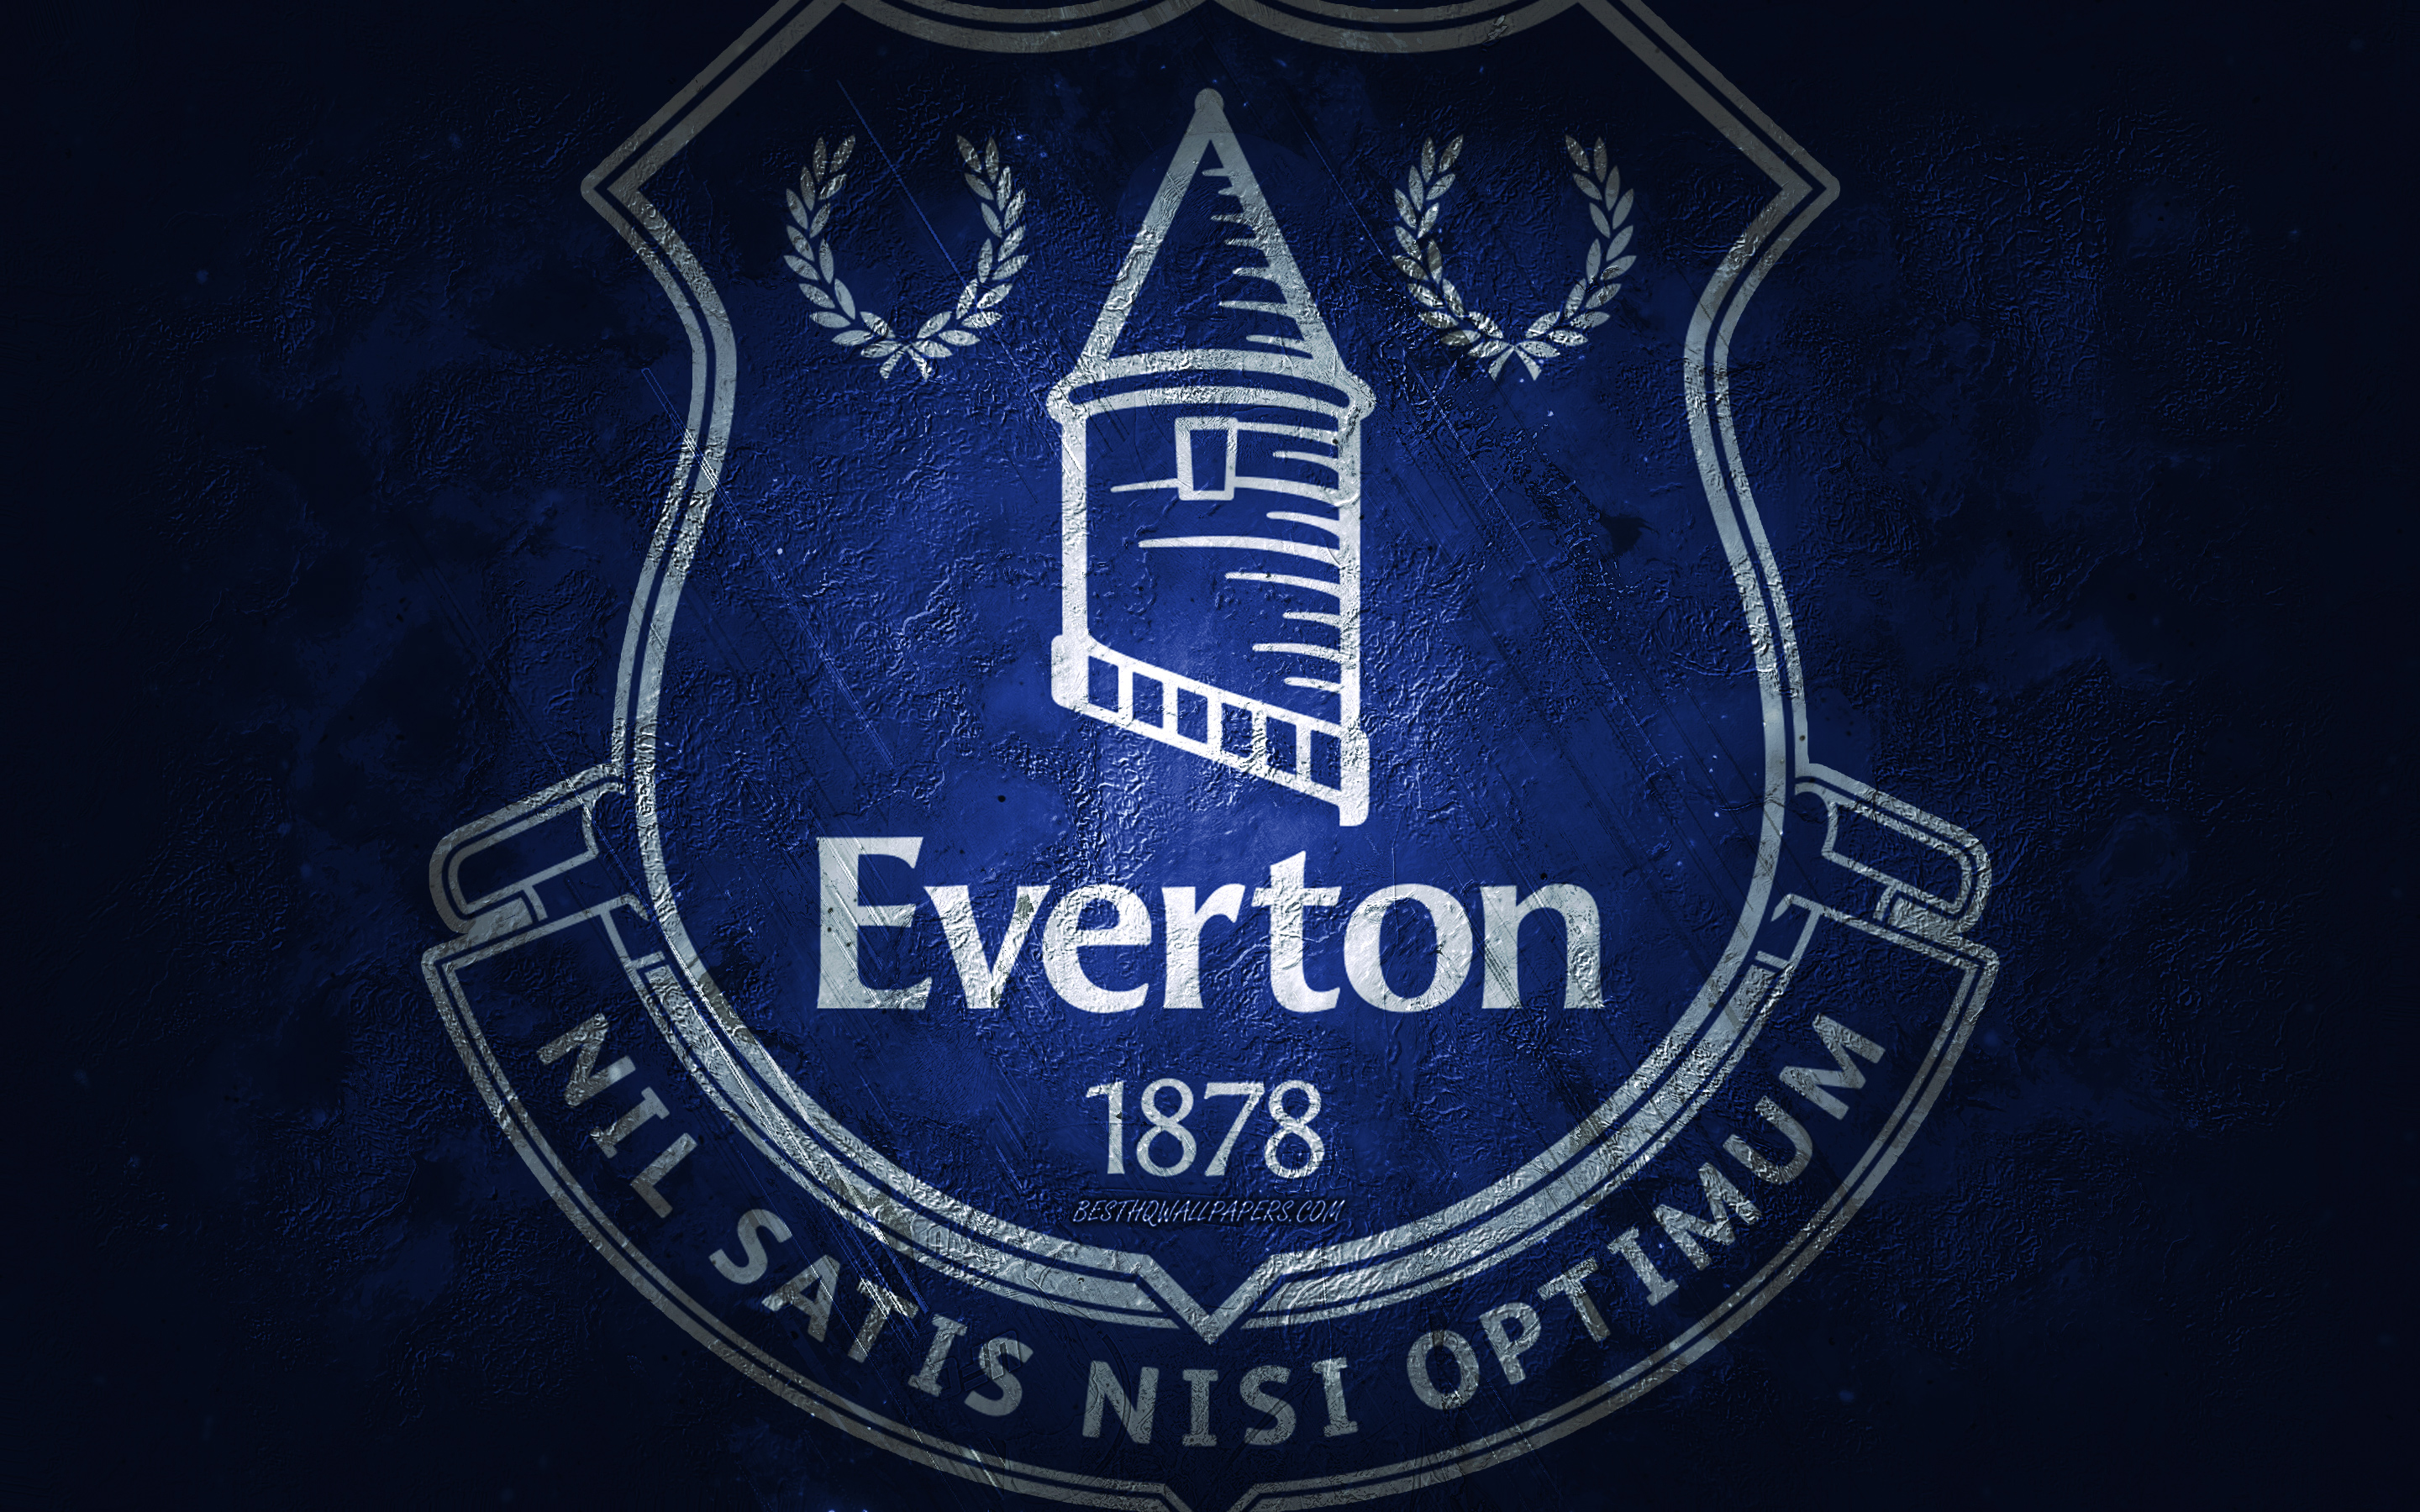 Everton Wallpapers